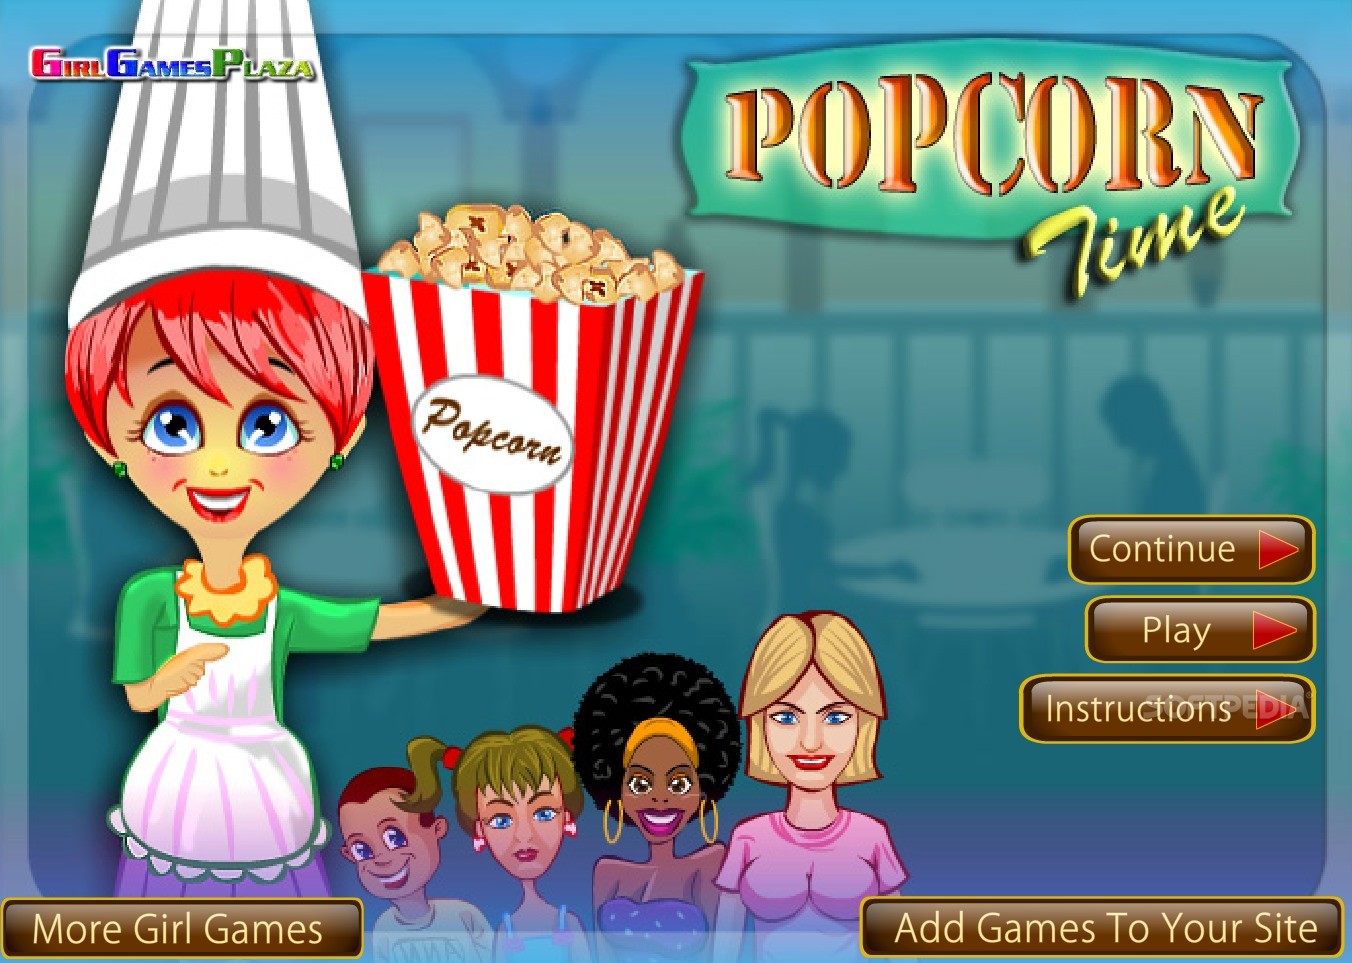 popcorn time apk download 2020